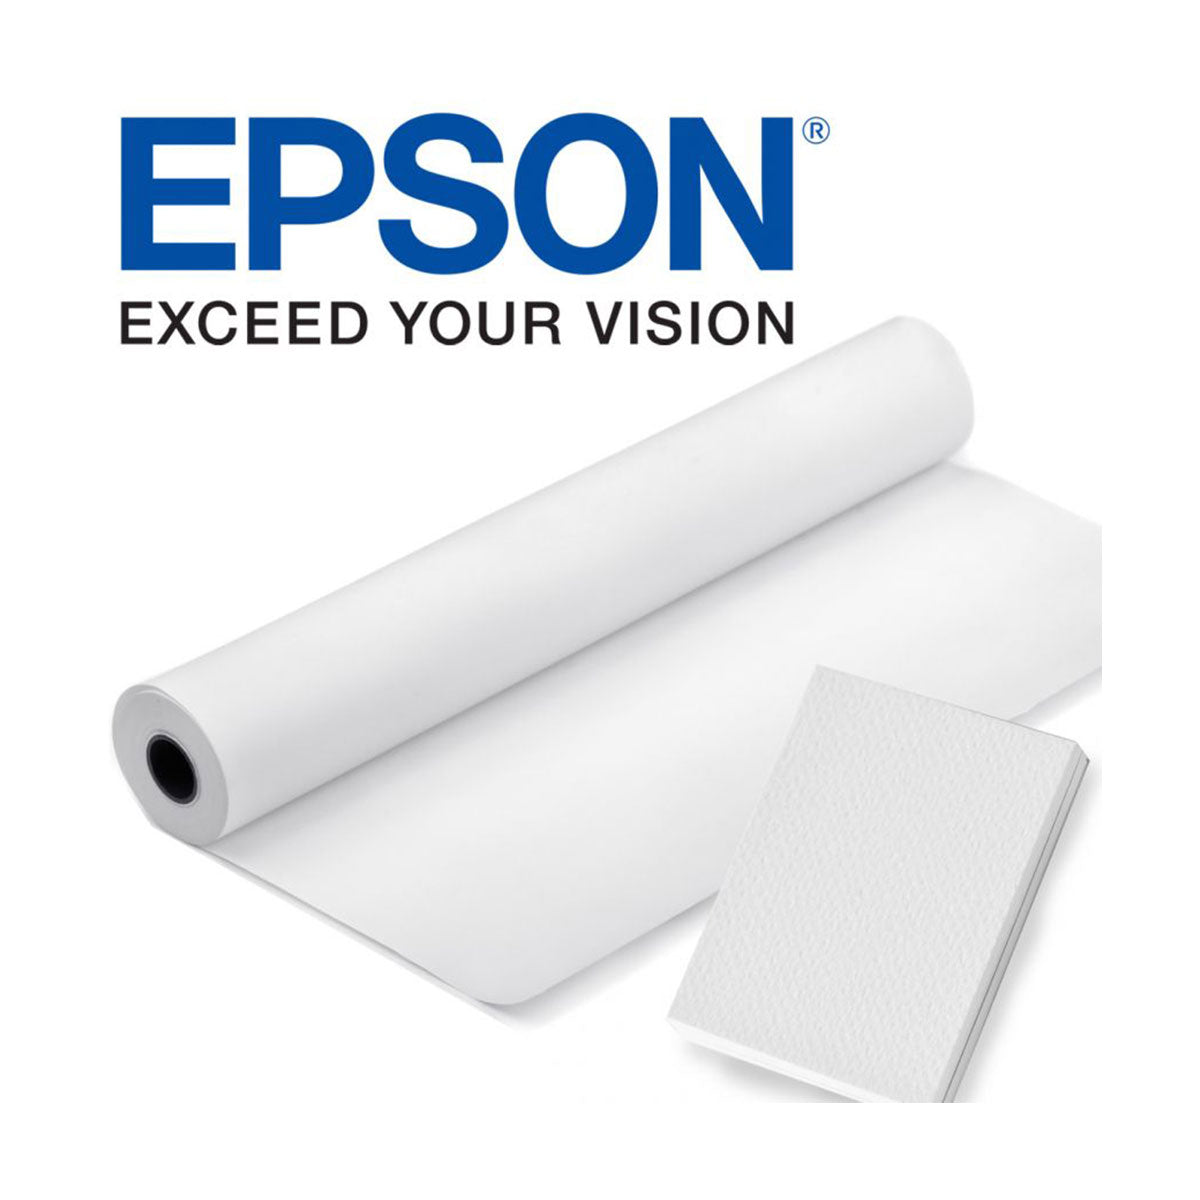 Epson Enhanced Matte Paper 44"x100' Roll